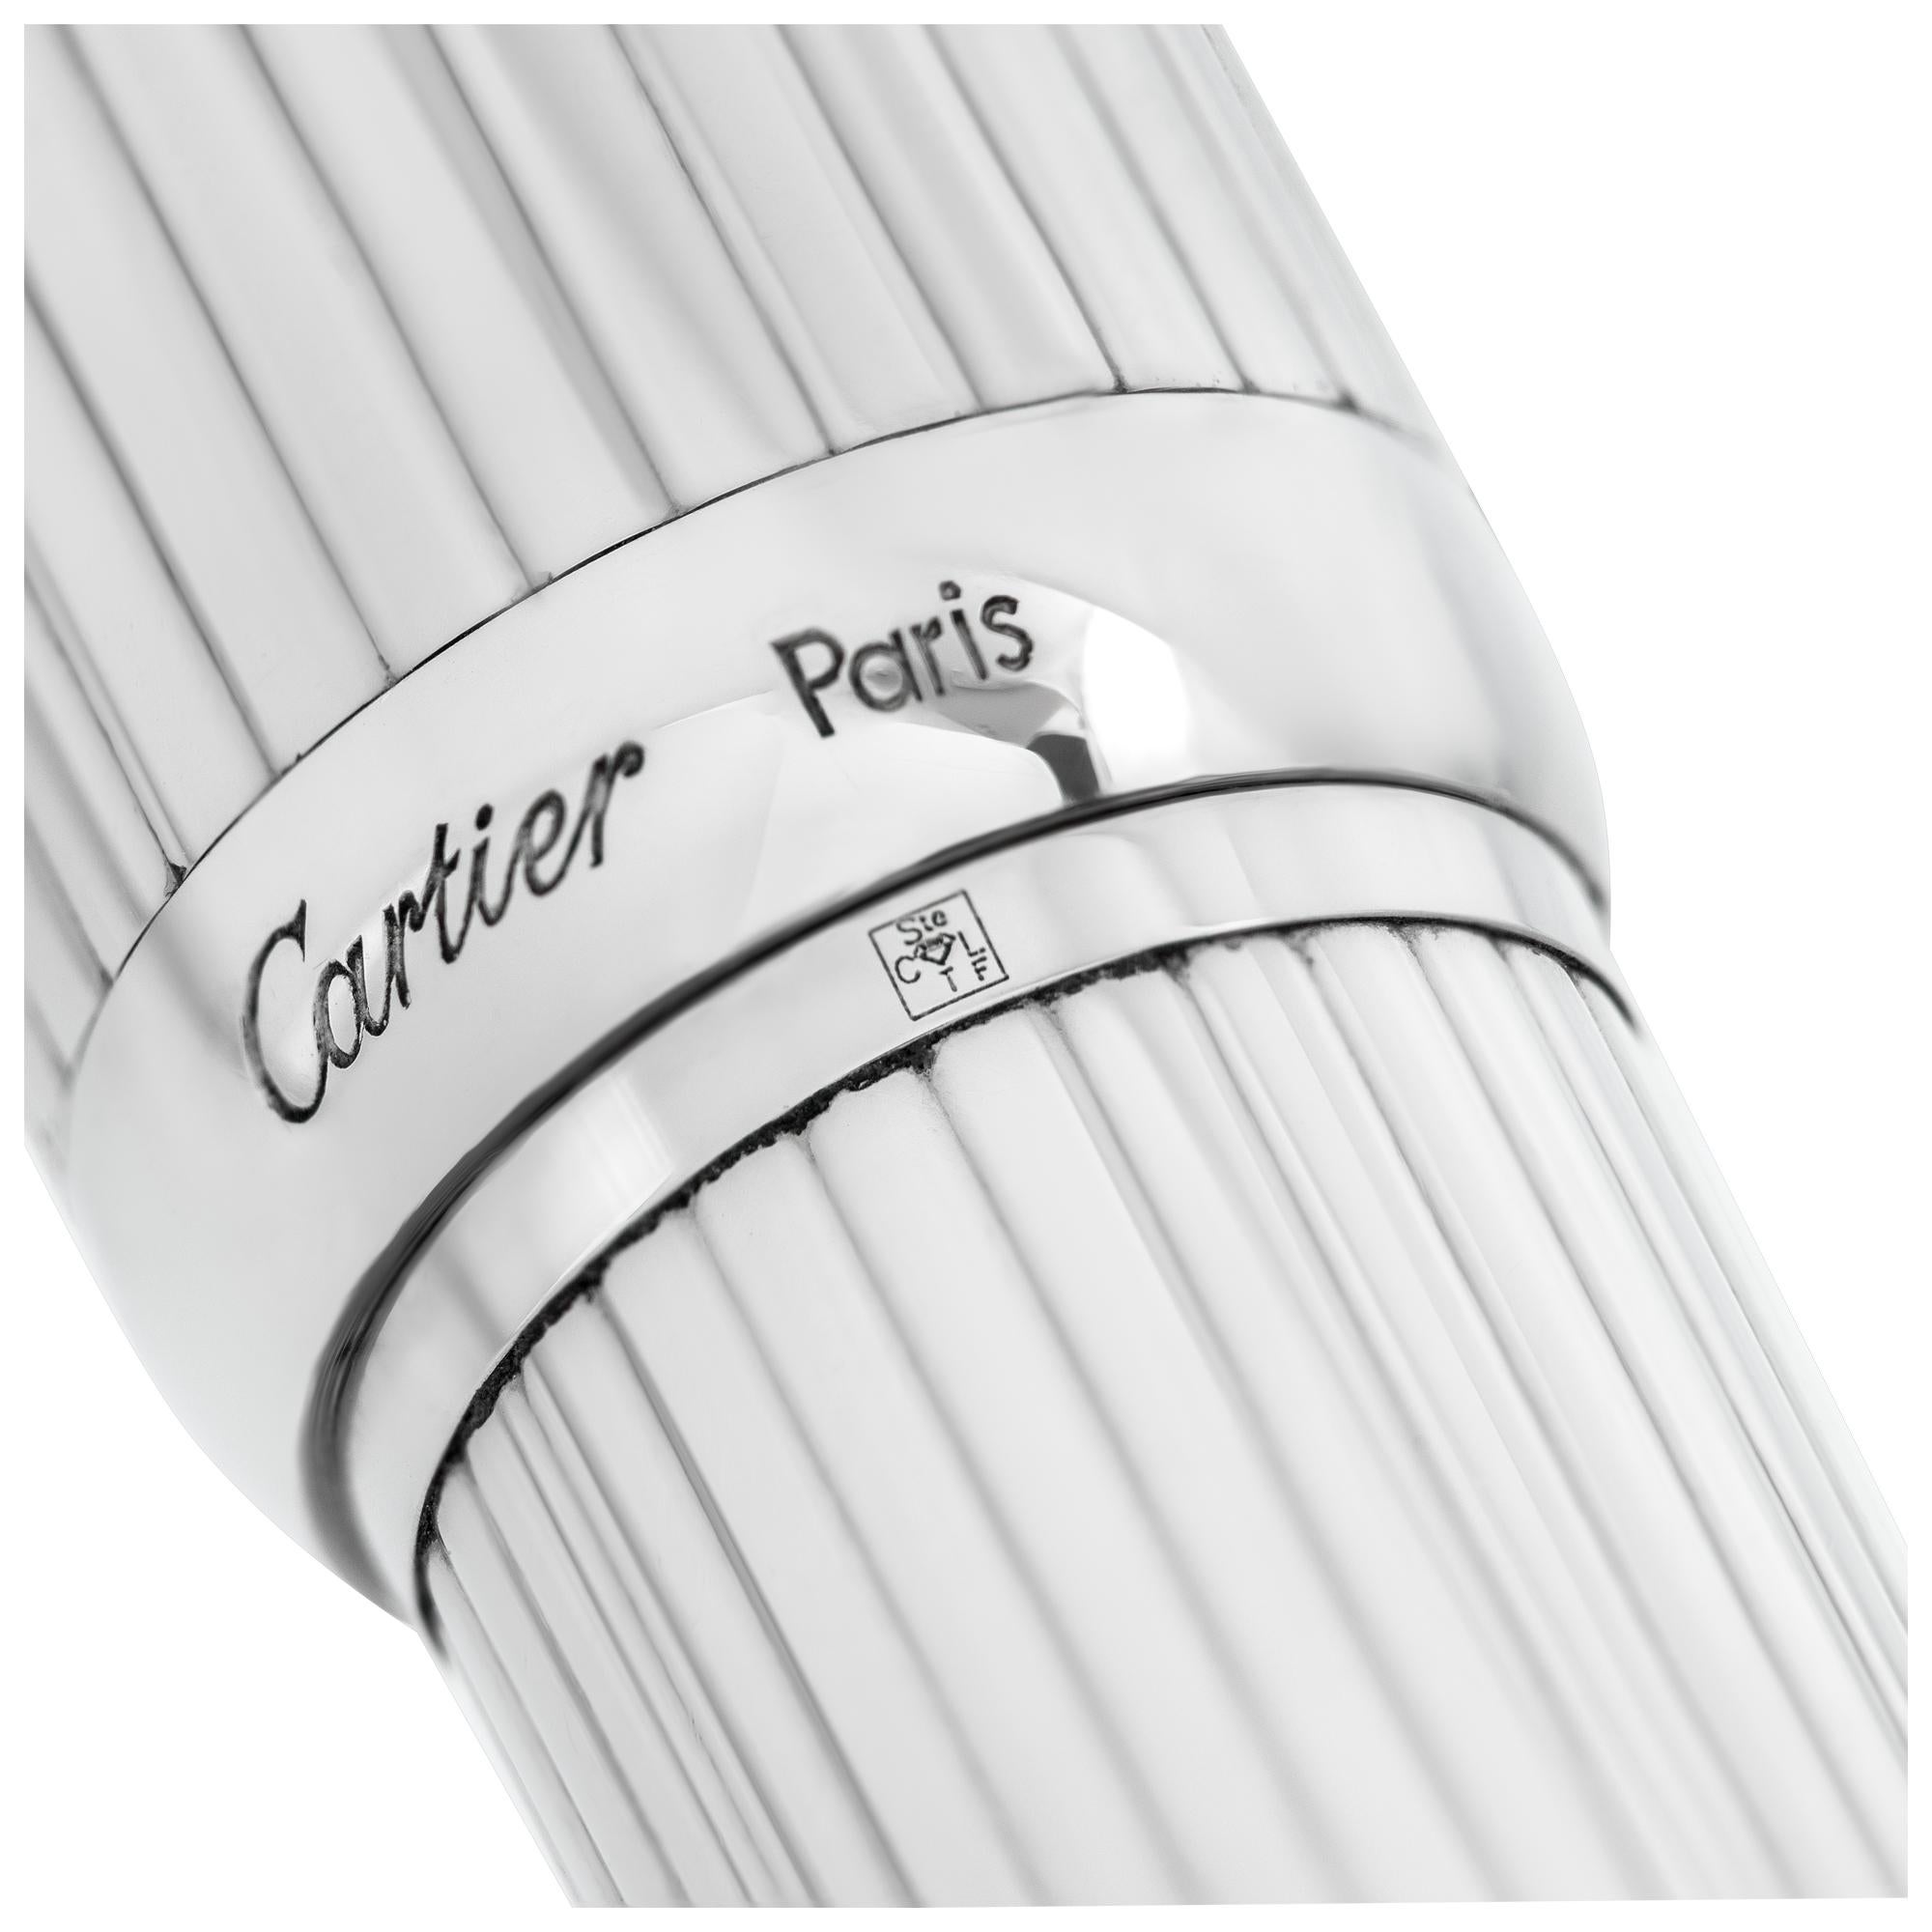 Louis Cartier Stripe Fountain Pen In Excellent Condition For Sale In Surfside, FL